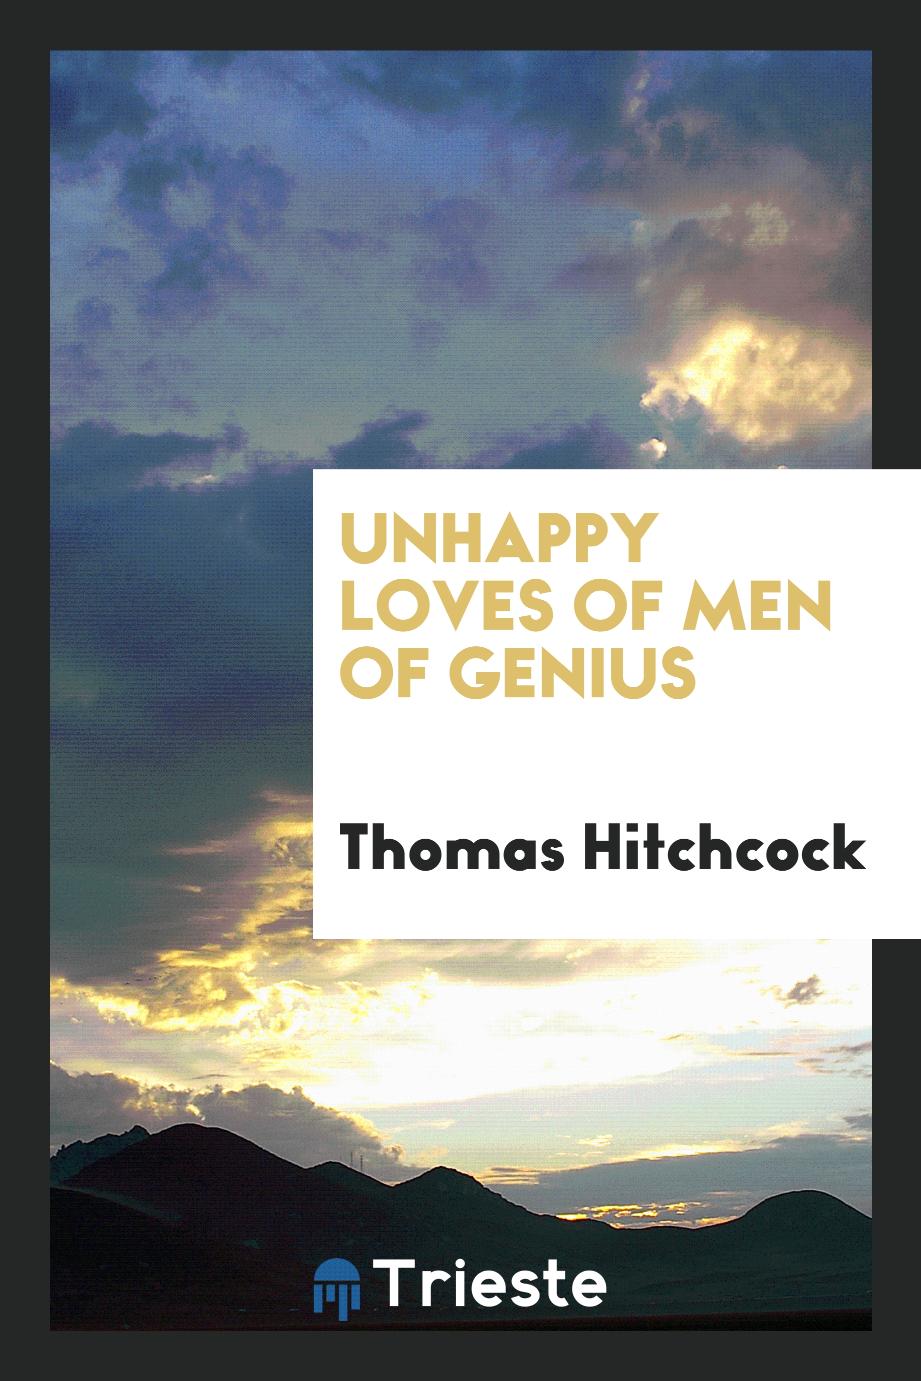 Unhappy loves of men of genius